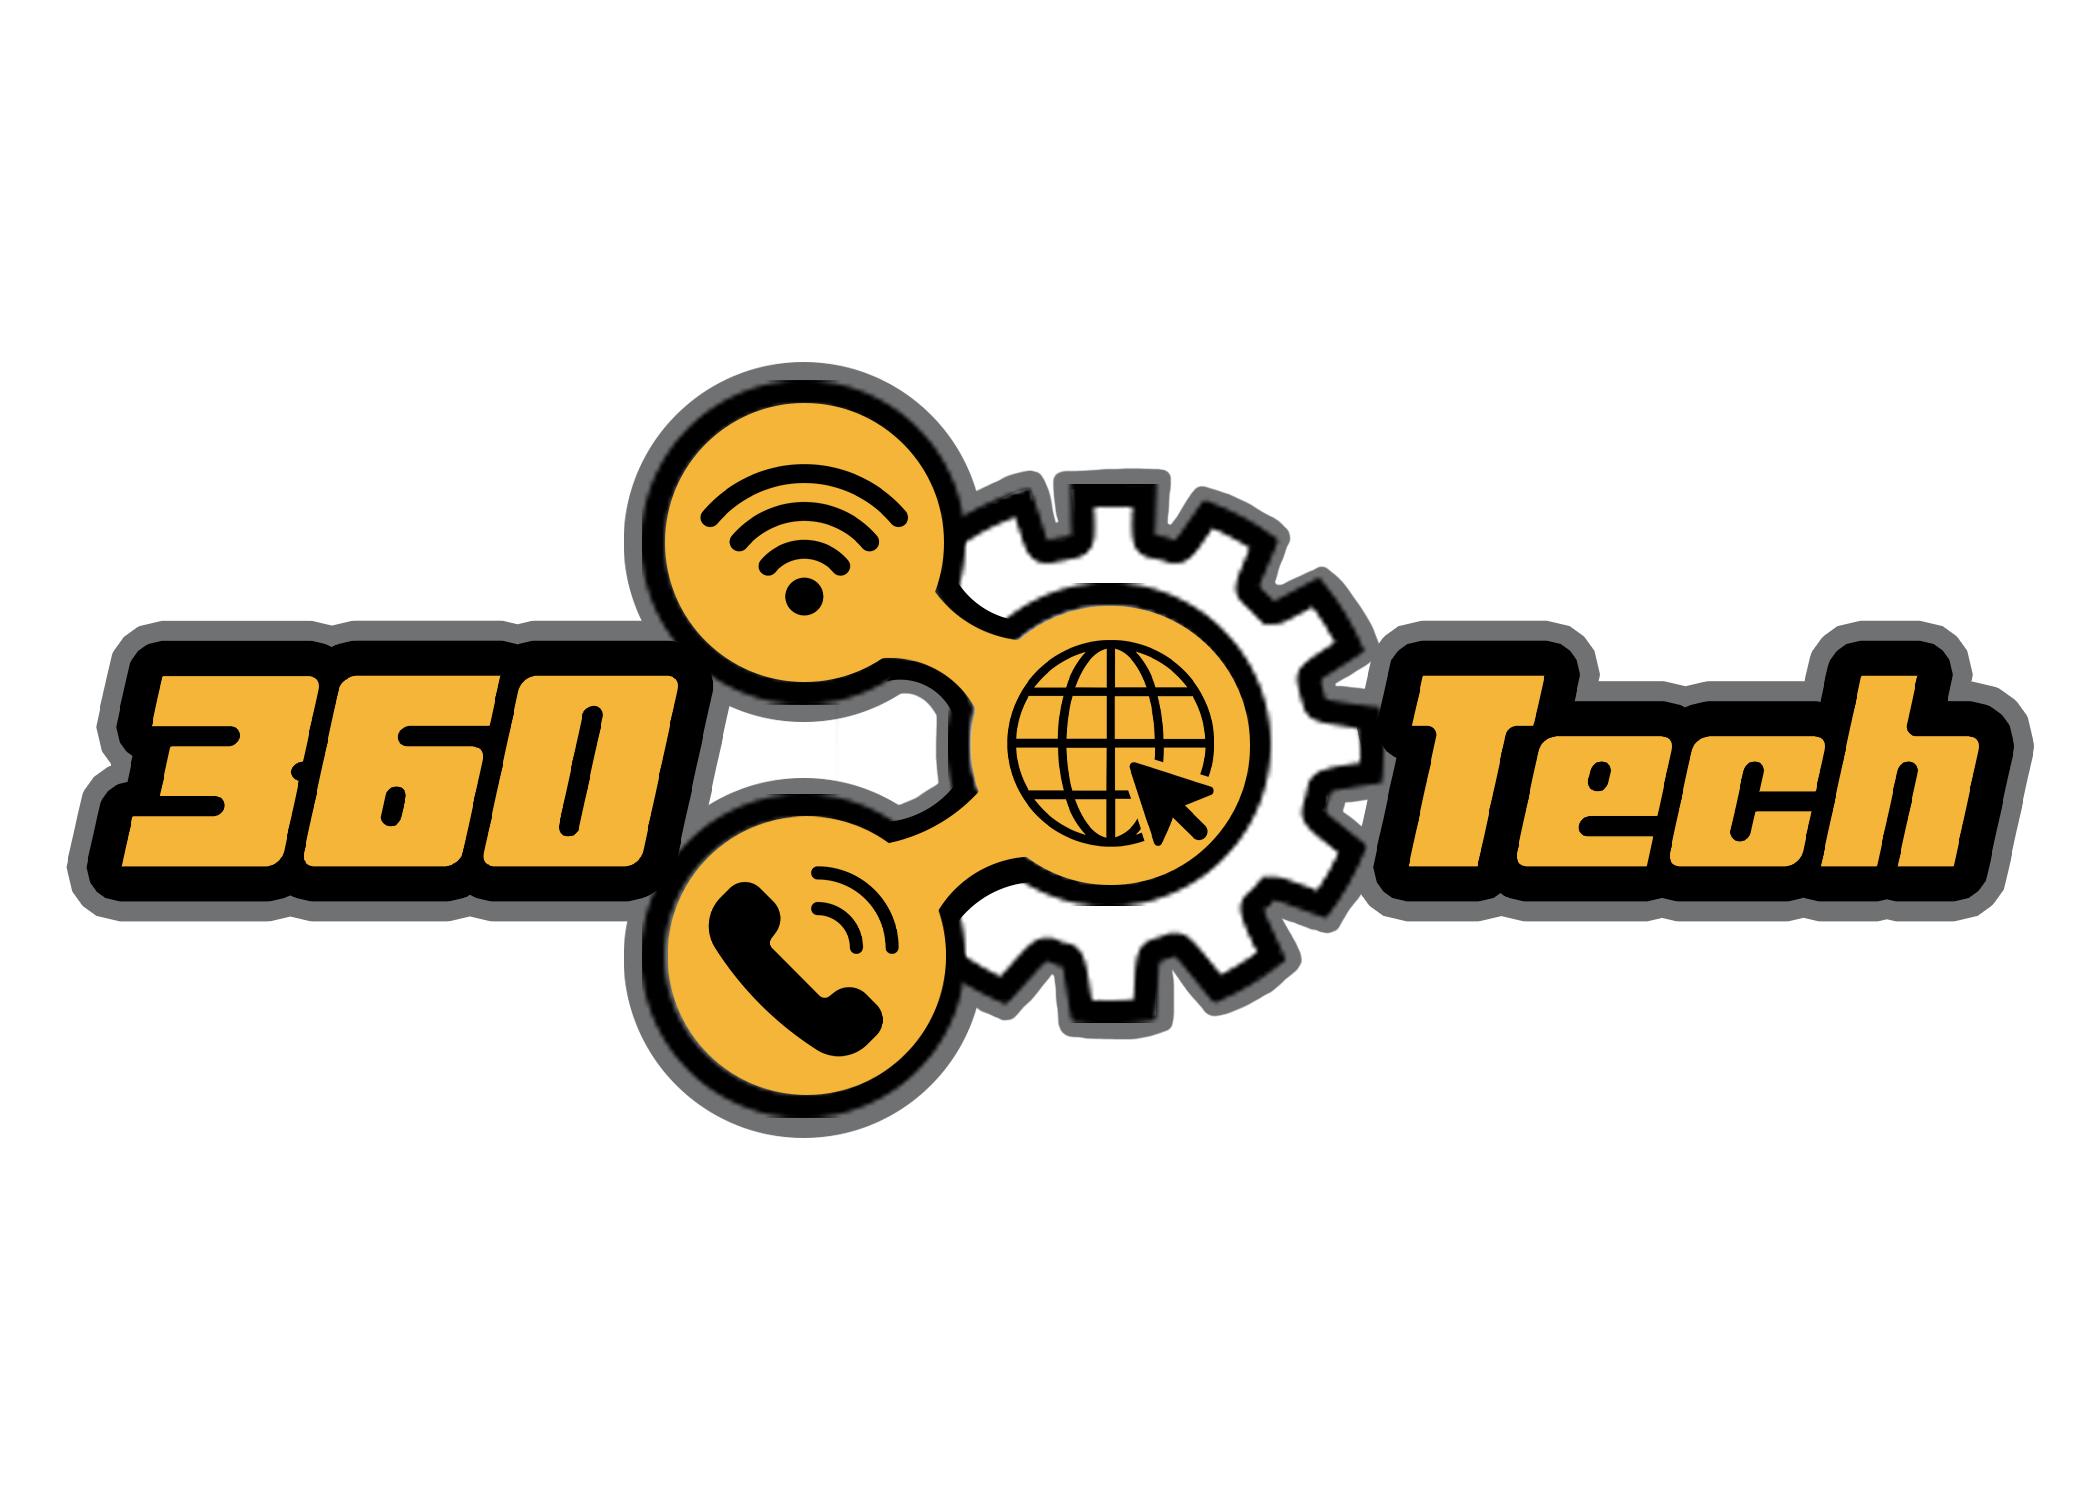 360 Tech LLC